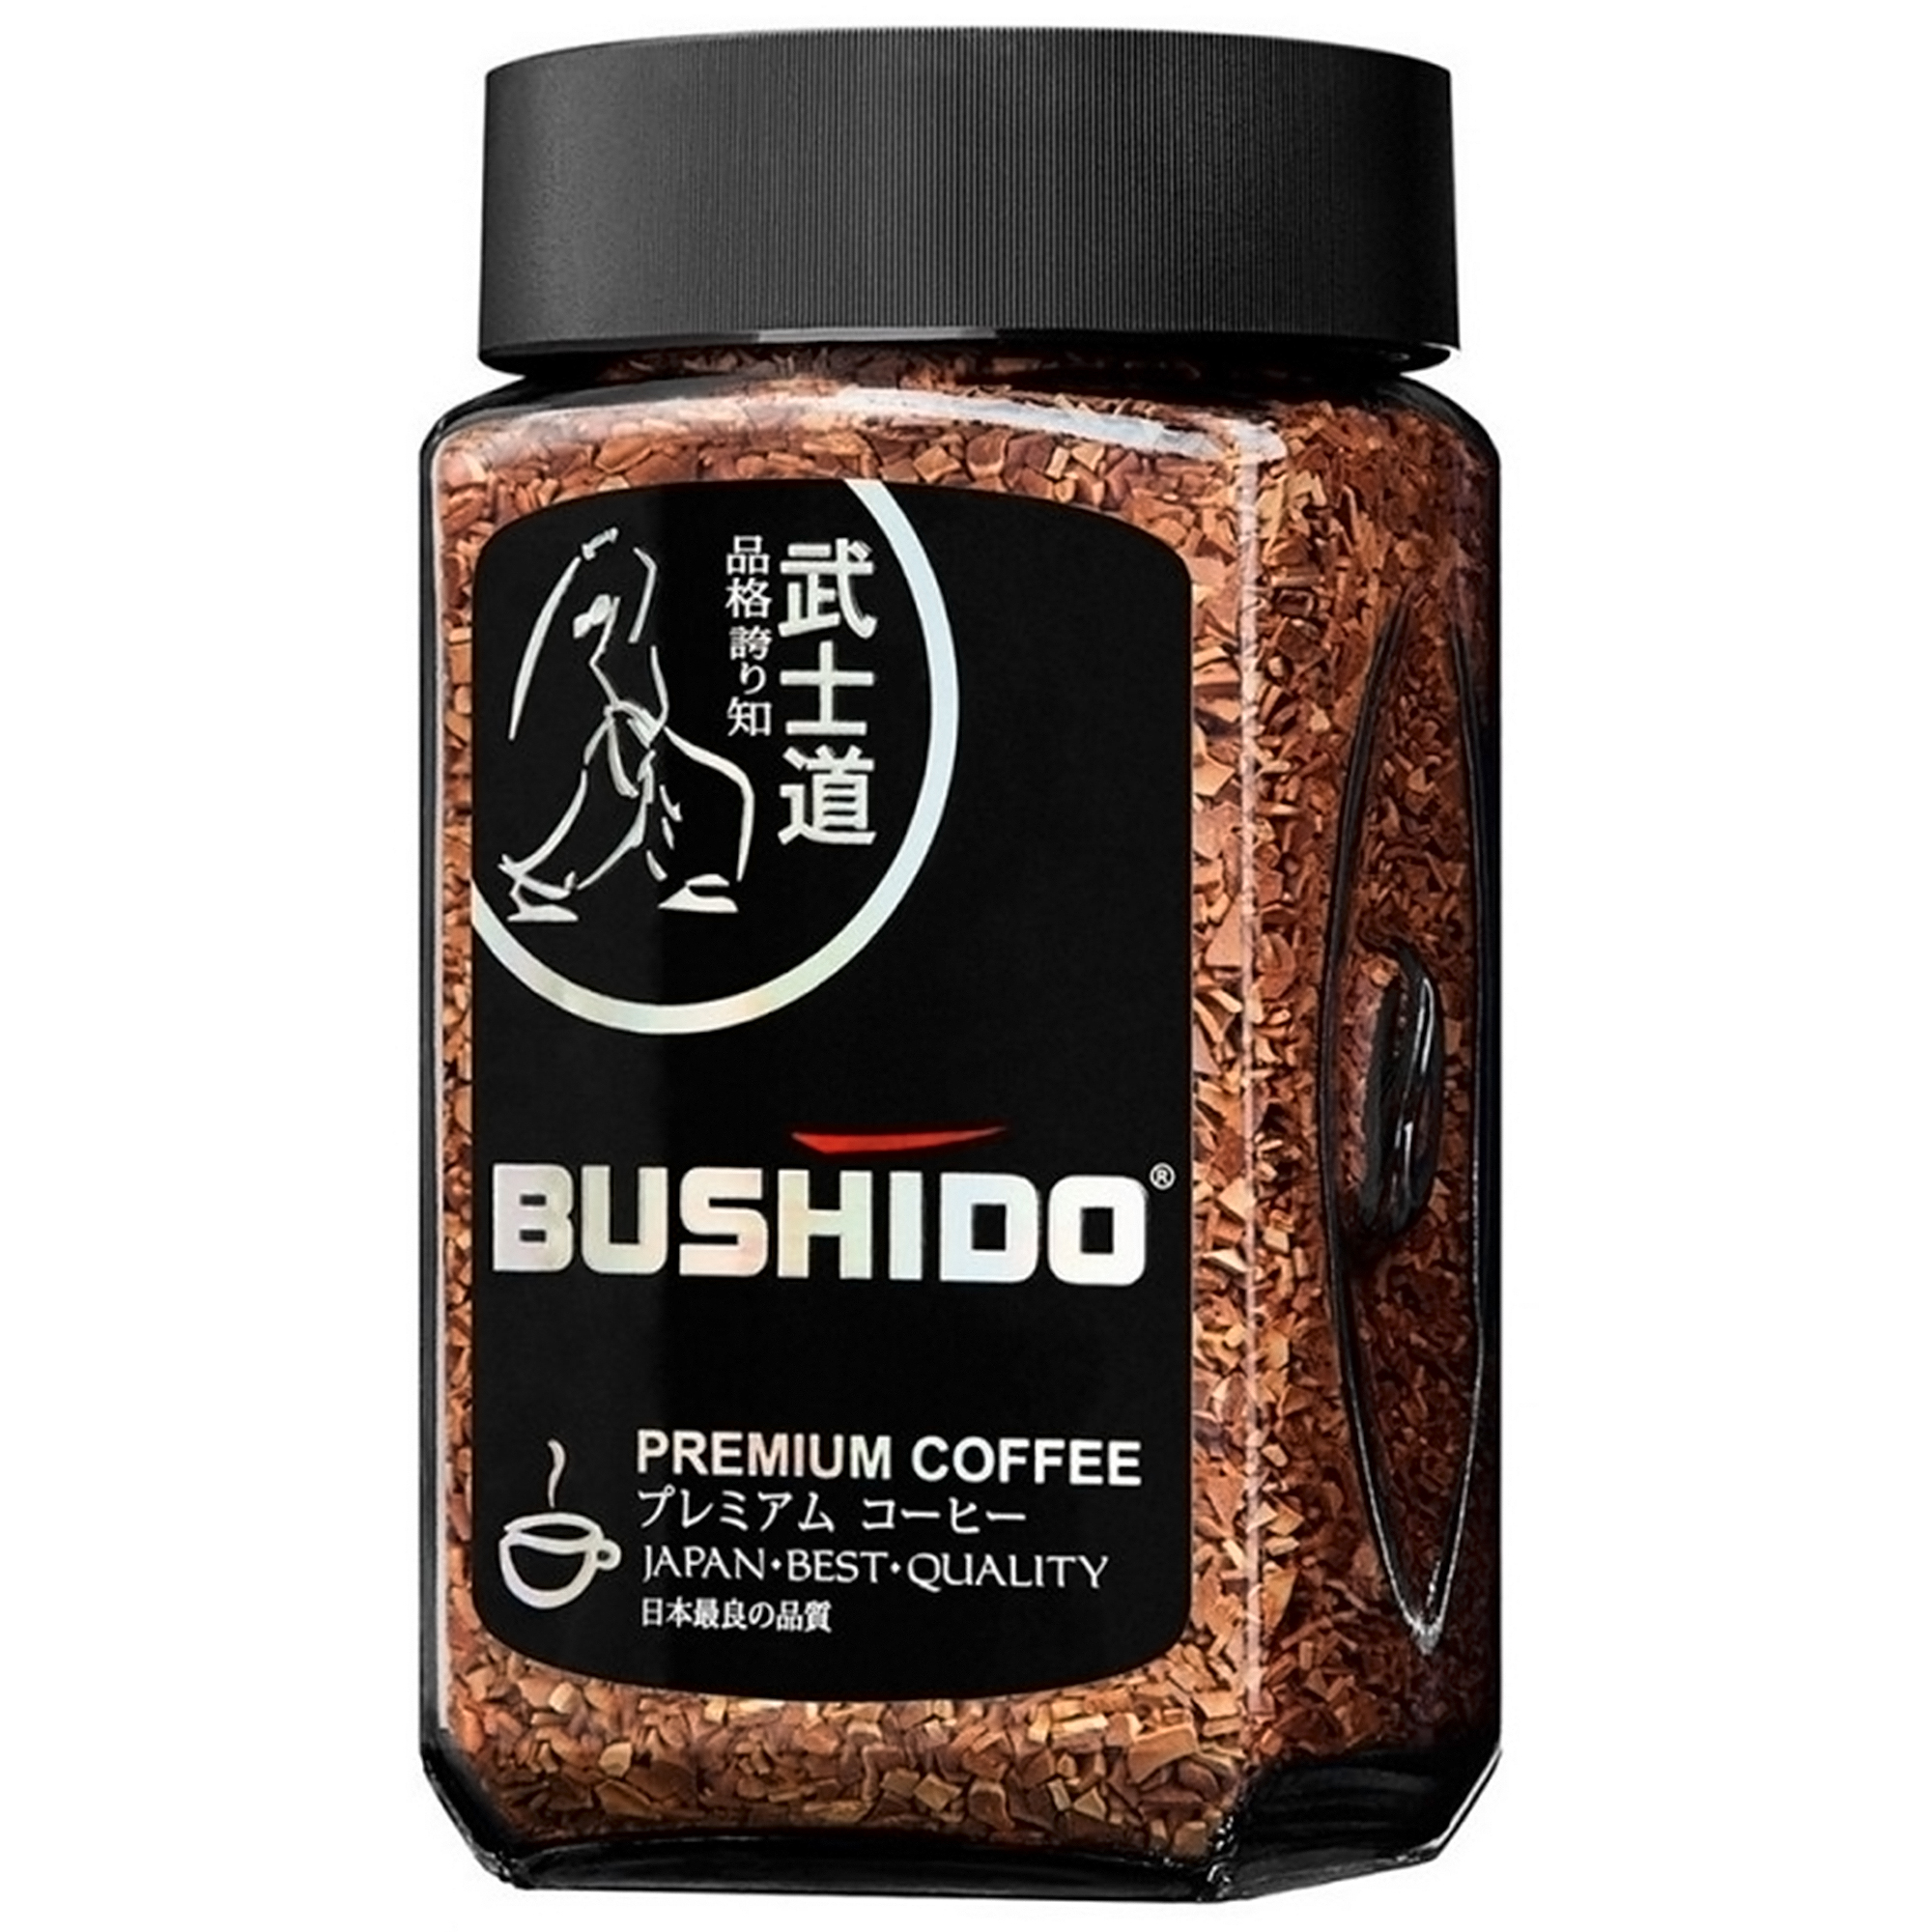 Кофе Bushido Black Katana растворимый, 50 г кофе растворимый 3 в 1 петровская слобода пломбир 18 г 25 пакетиков